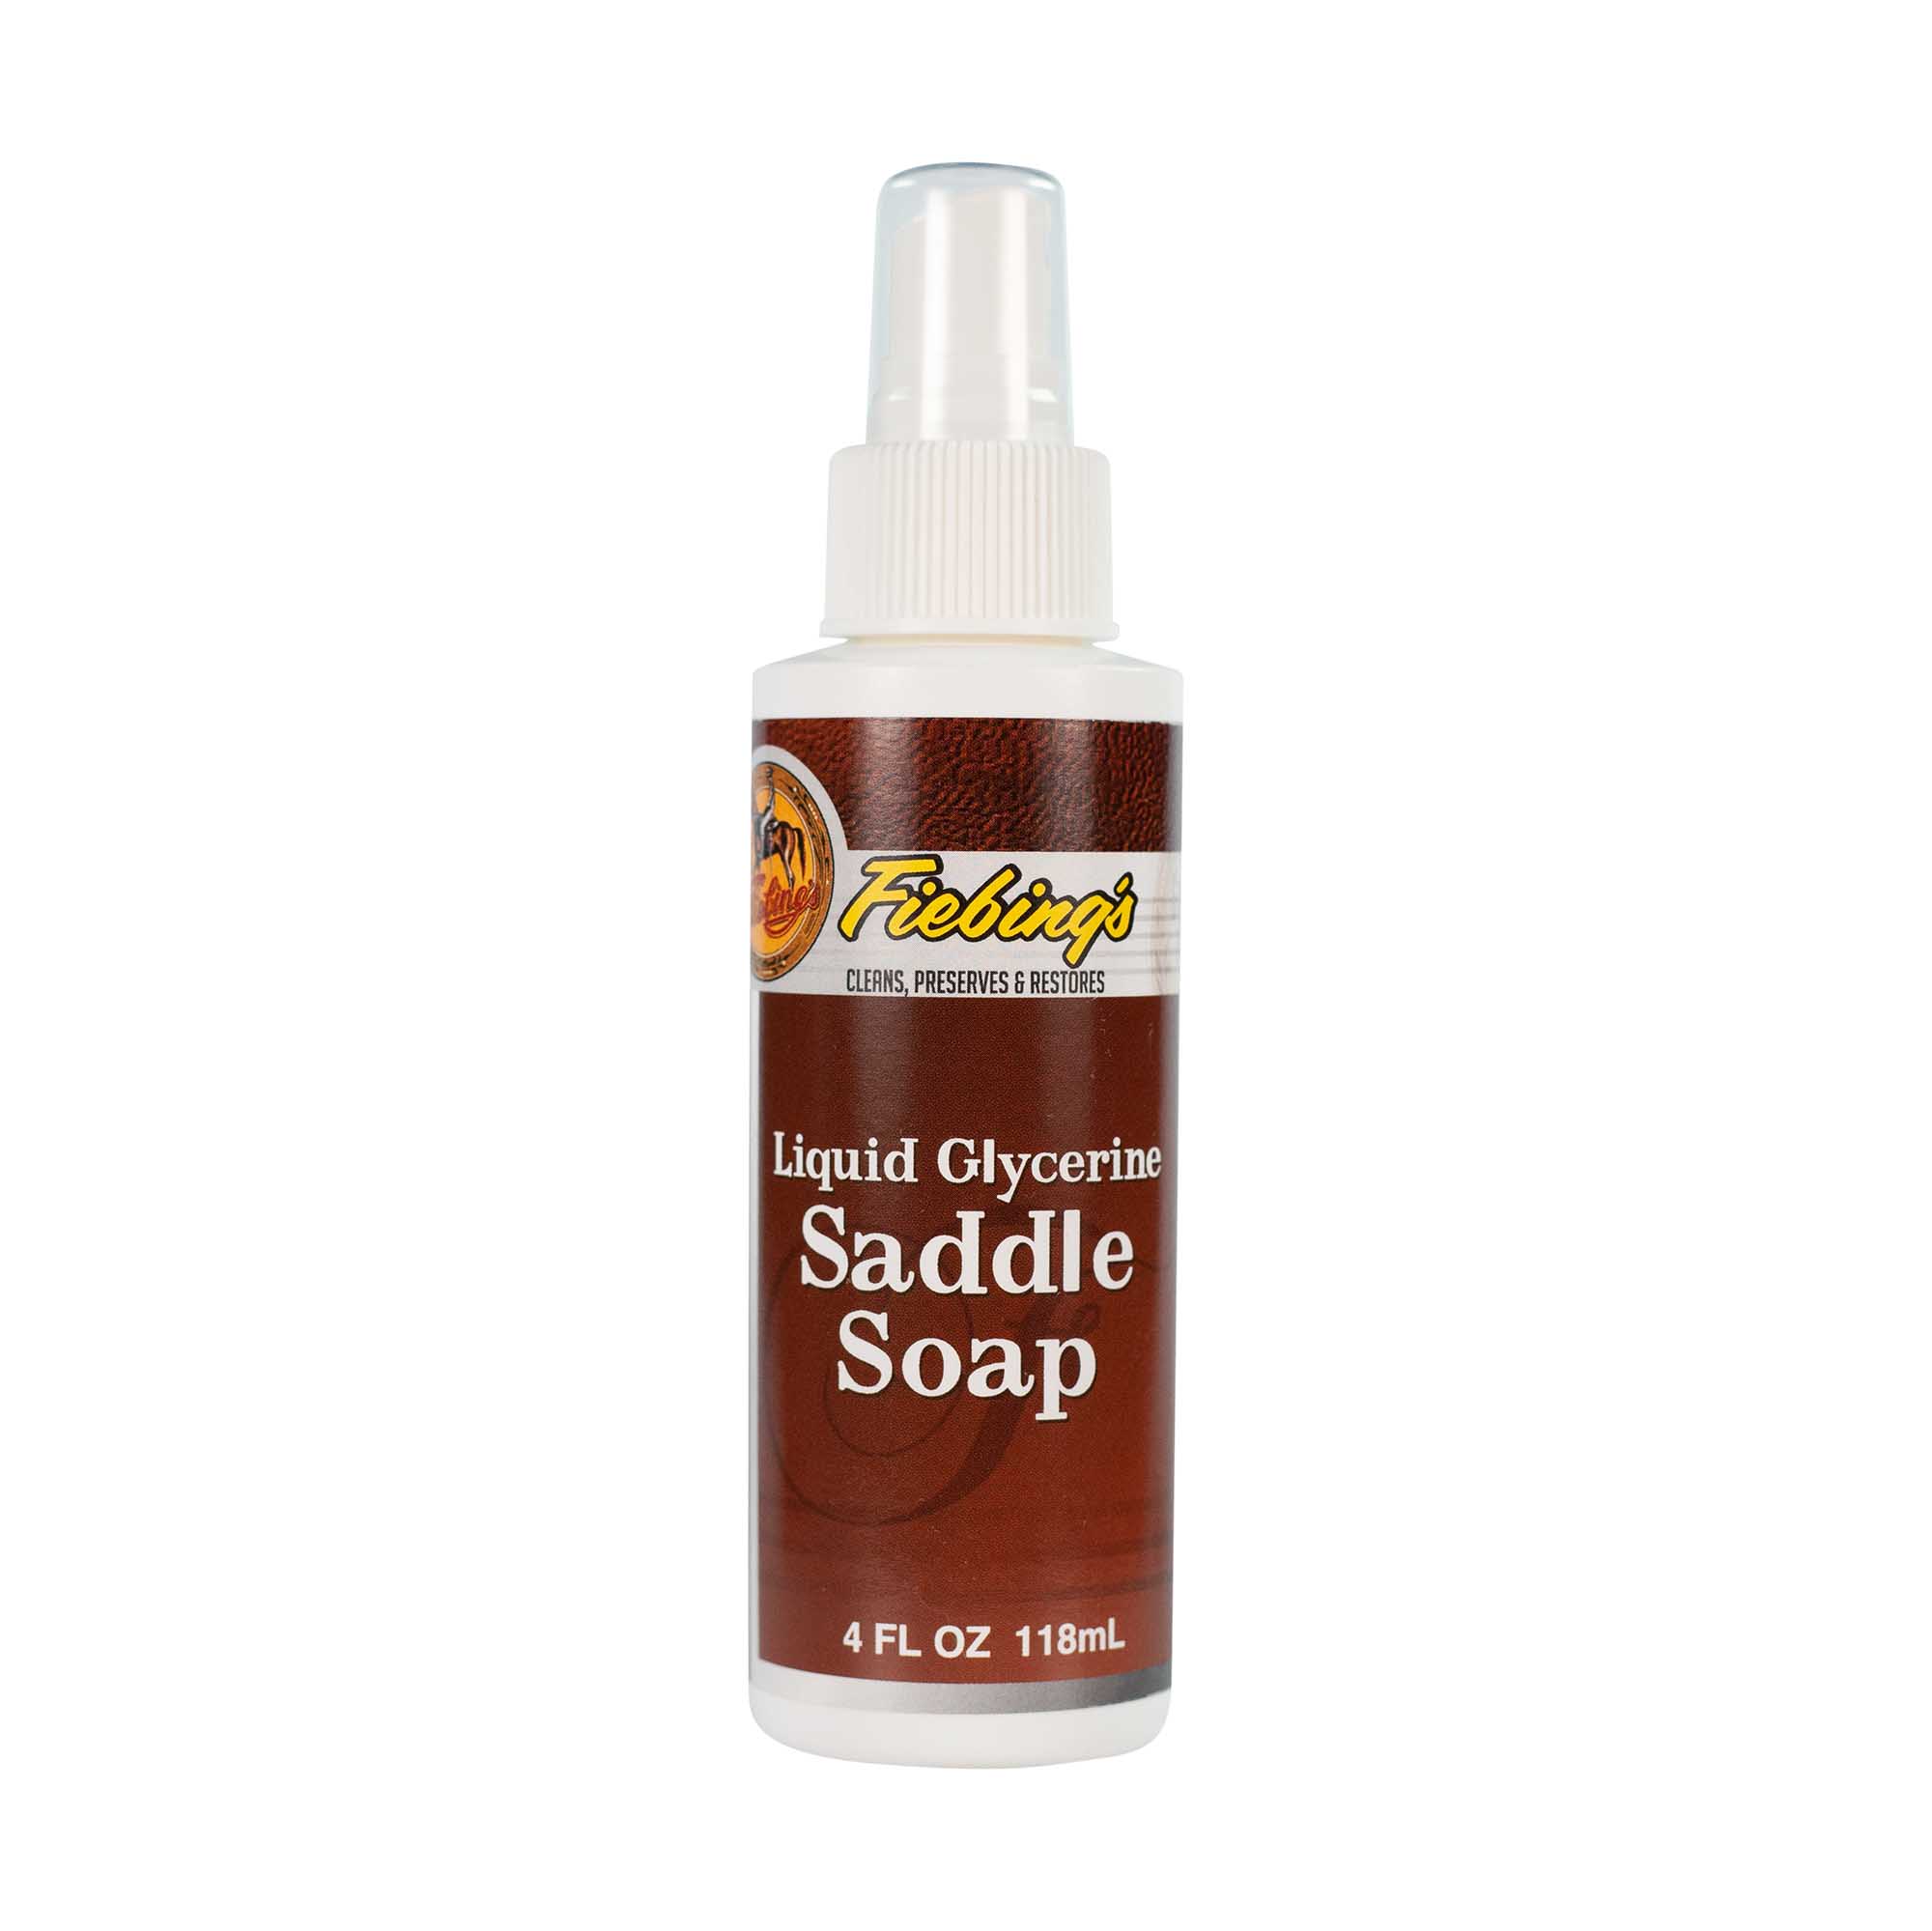 Fiebing's Liquid Glycerine Saddle Soap - Saltillo, MS - Scruggs Farm Supply